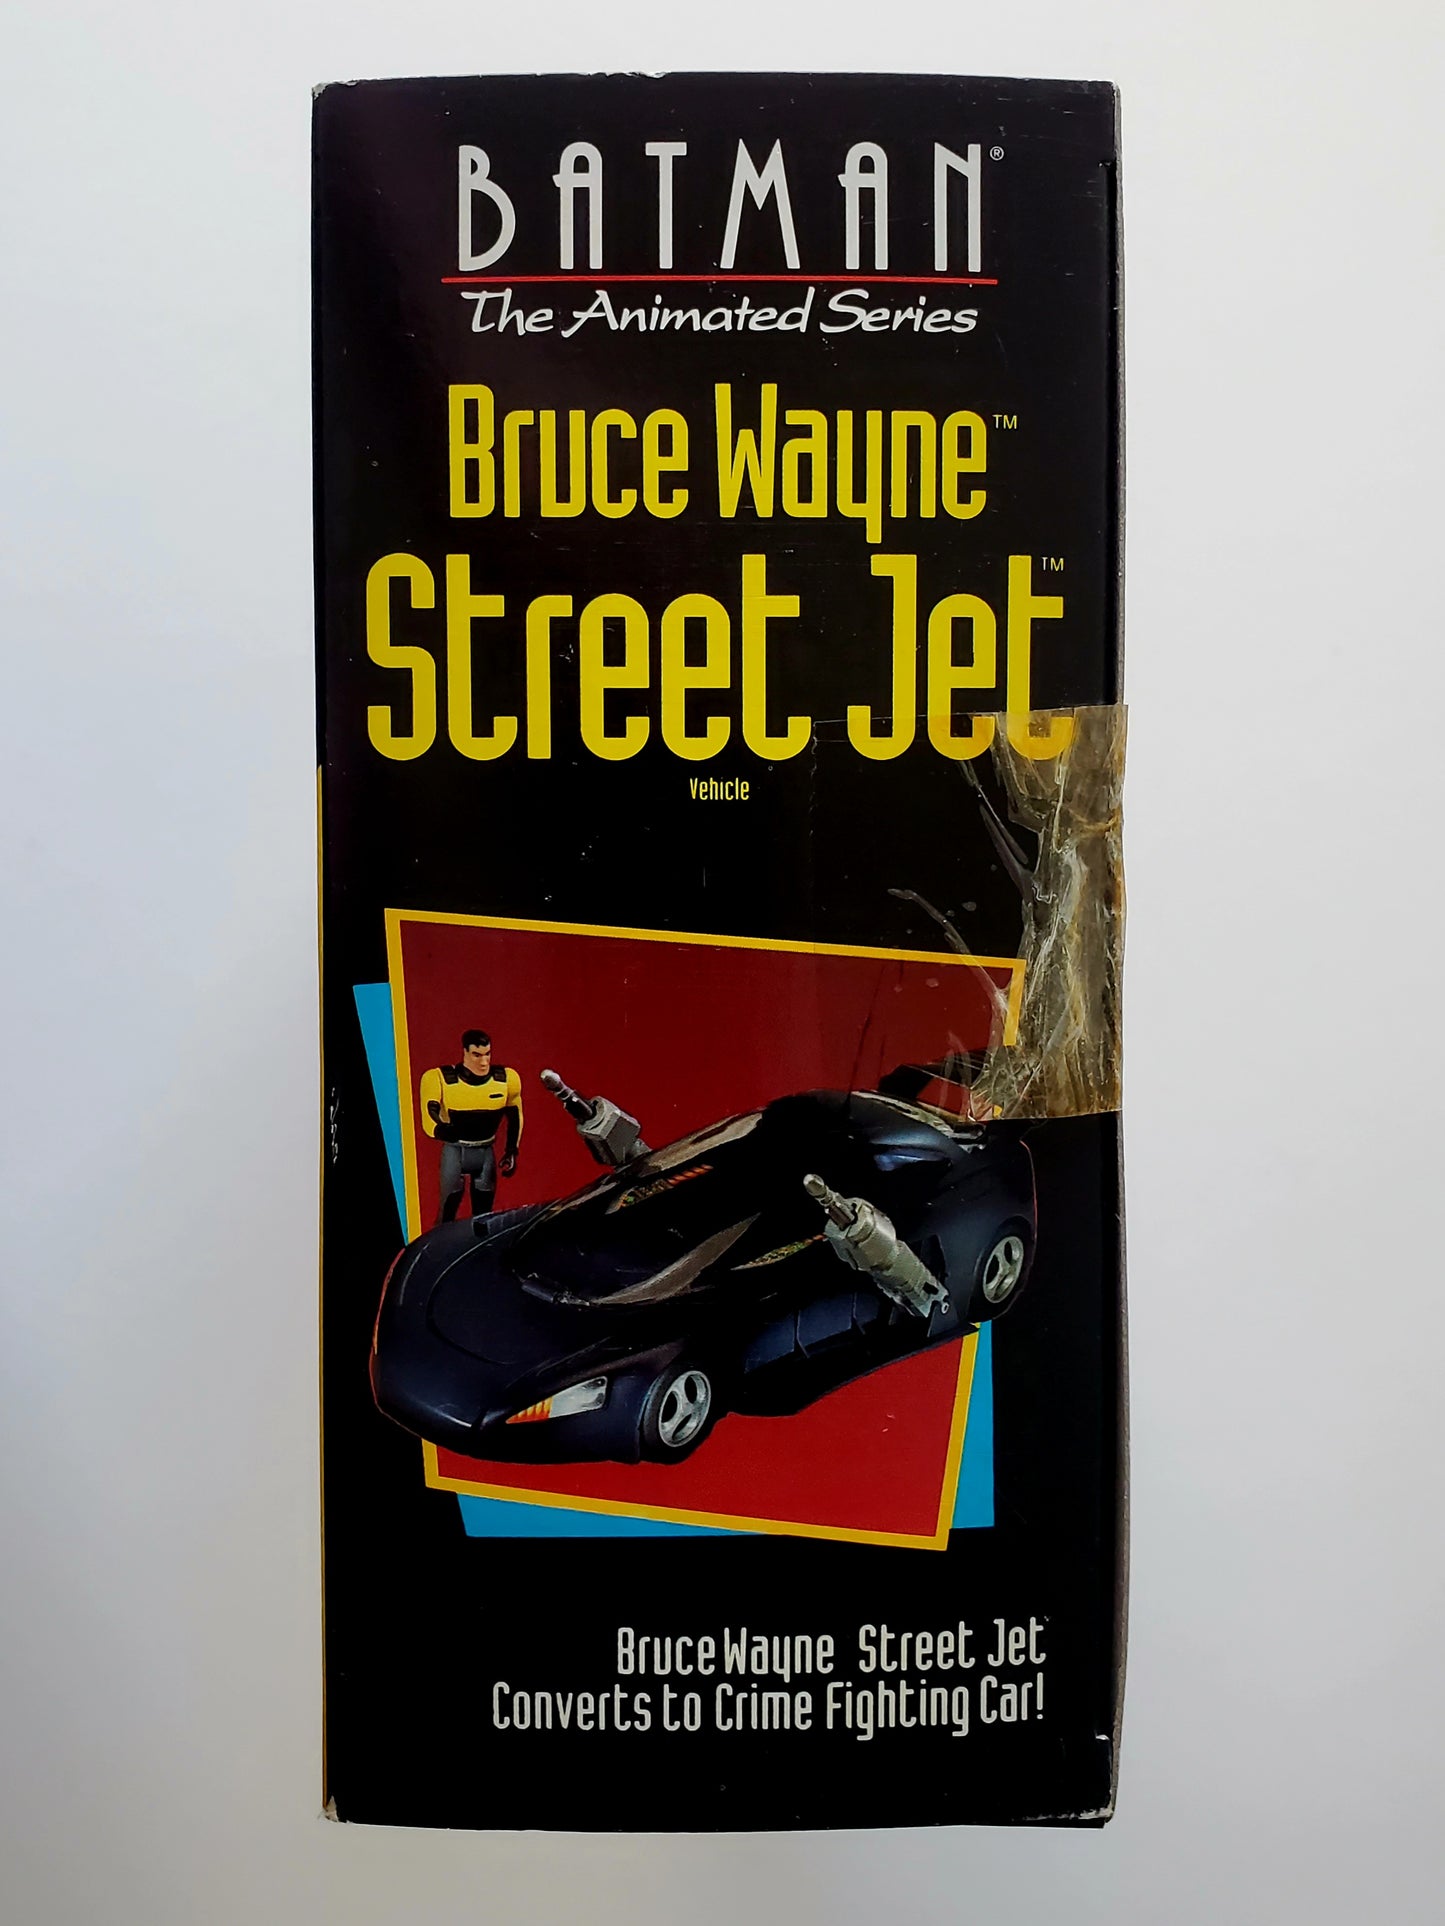 Bruce Wayne Street Jet Vehicle from Batman: The Animated Series